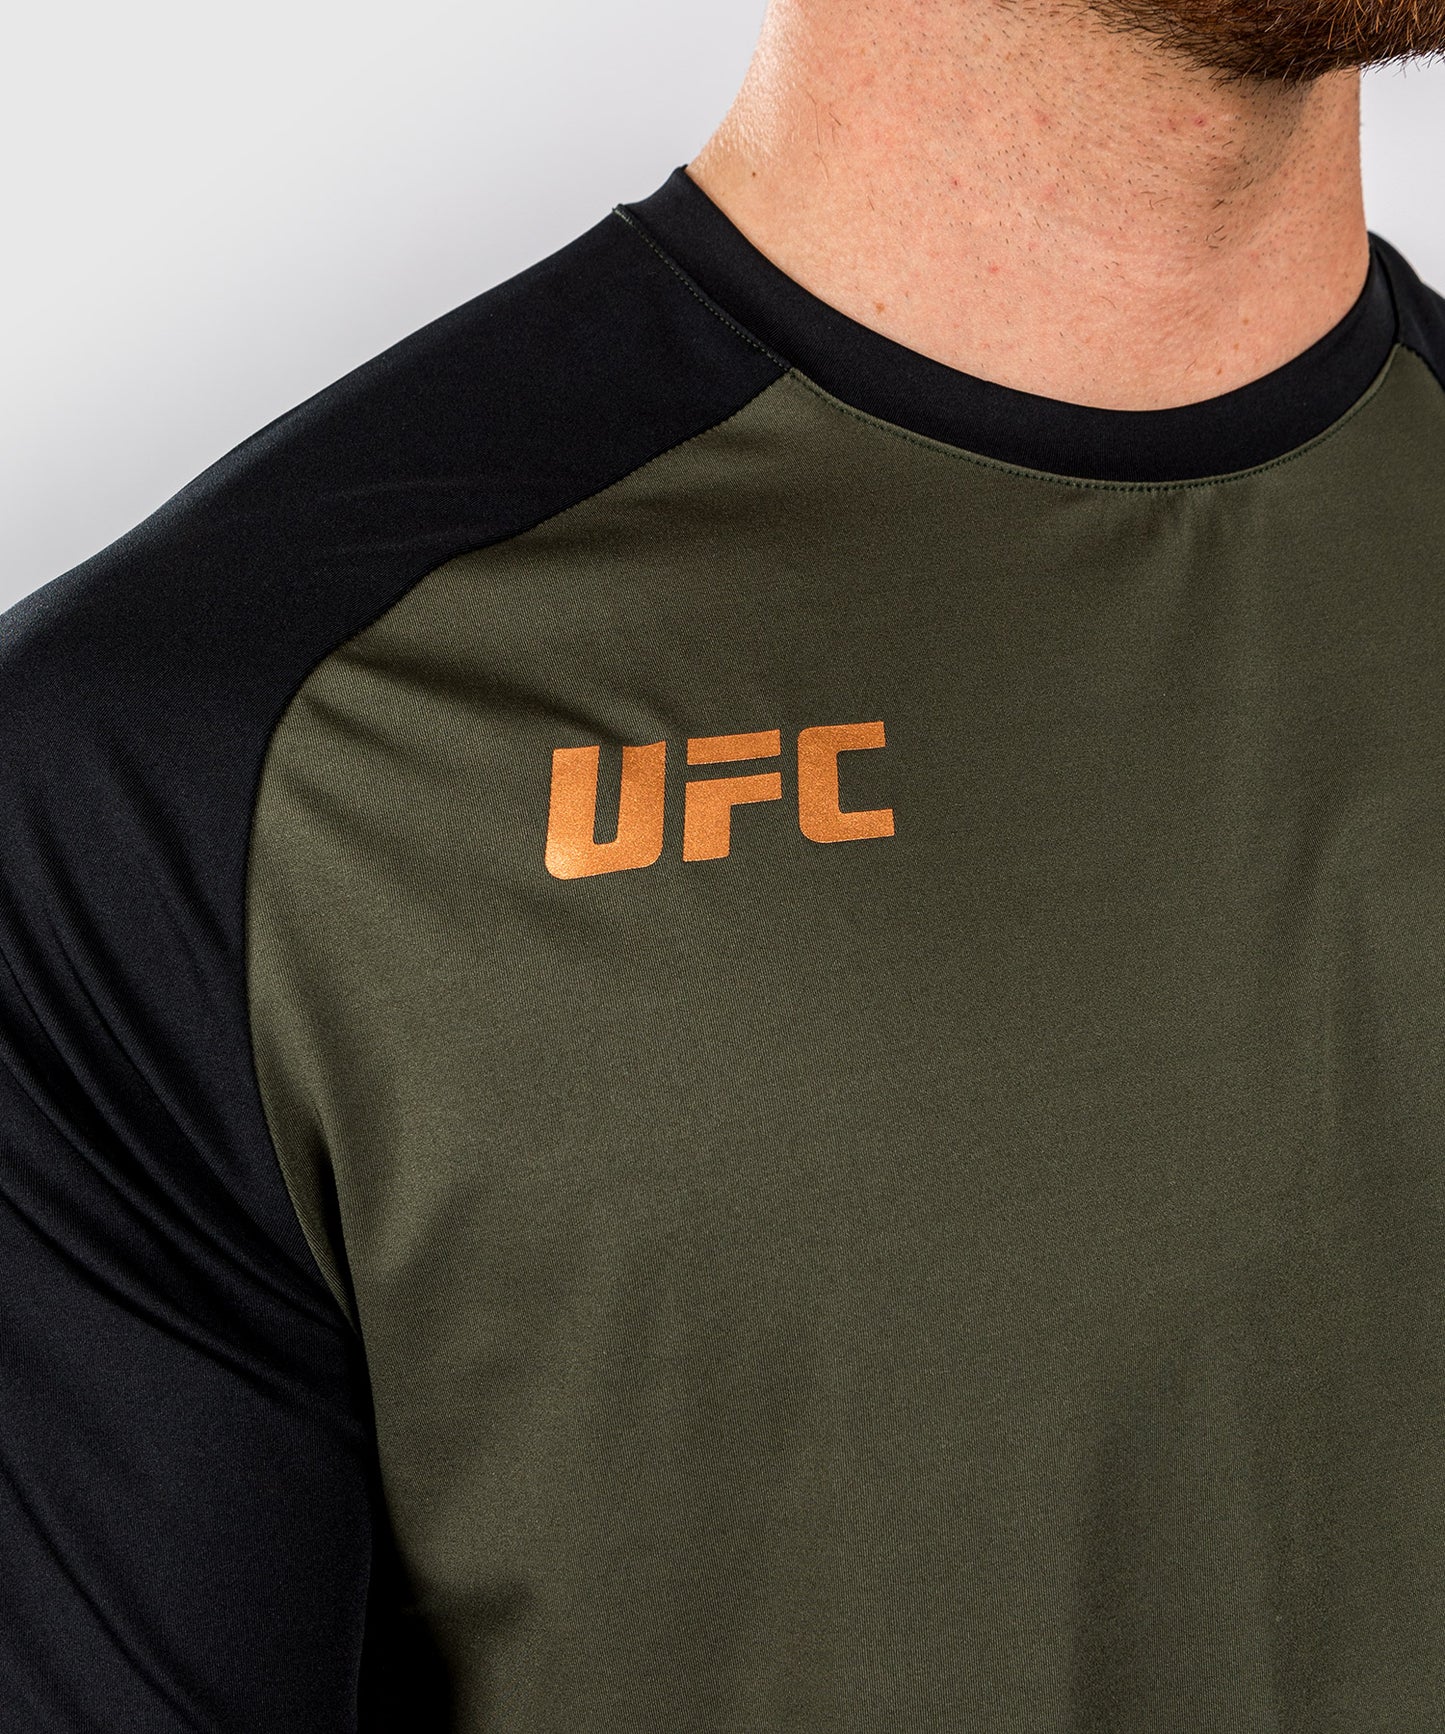 UFC Adrenaline by Venum Fight Week Men’s Dry-tech T-shirt - Khaki/Bronze